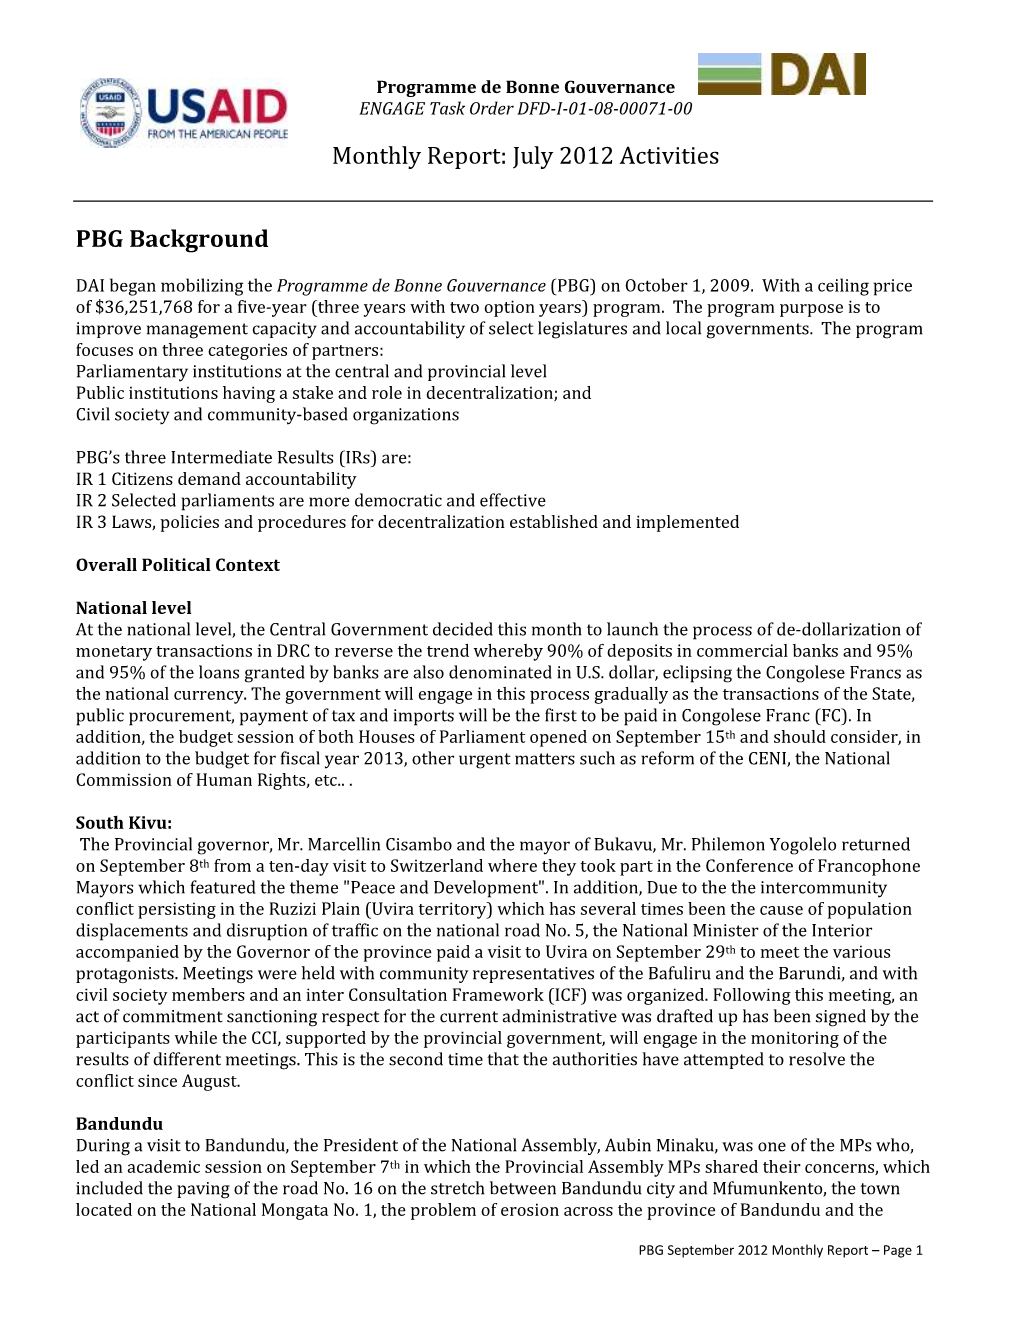 Monthly Report: July 2012 Activities PBG Background